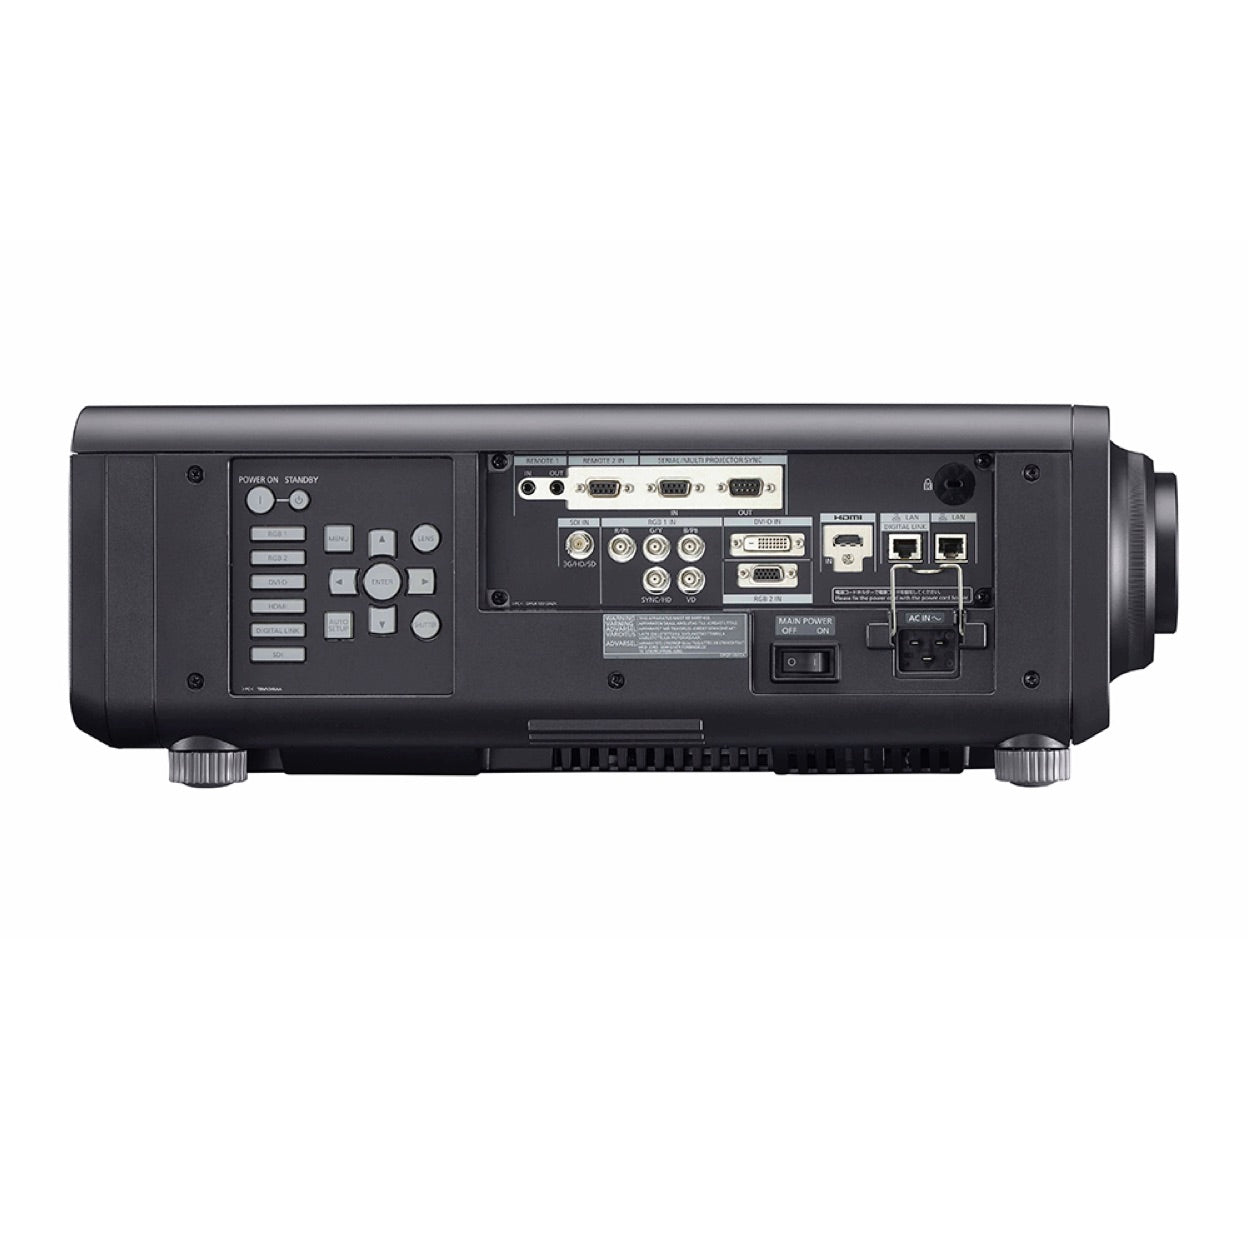 Panasonic PT-RZ890BU7 - 1-Chip DLP WUXGA Laser Projector, black, side